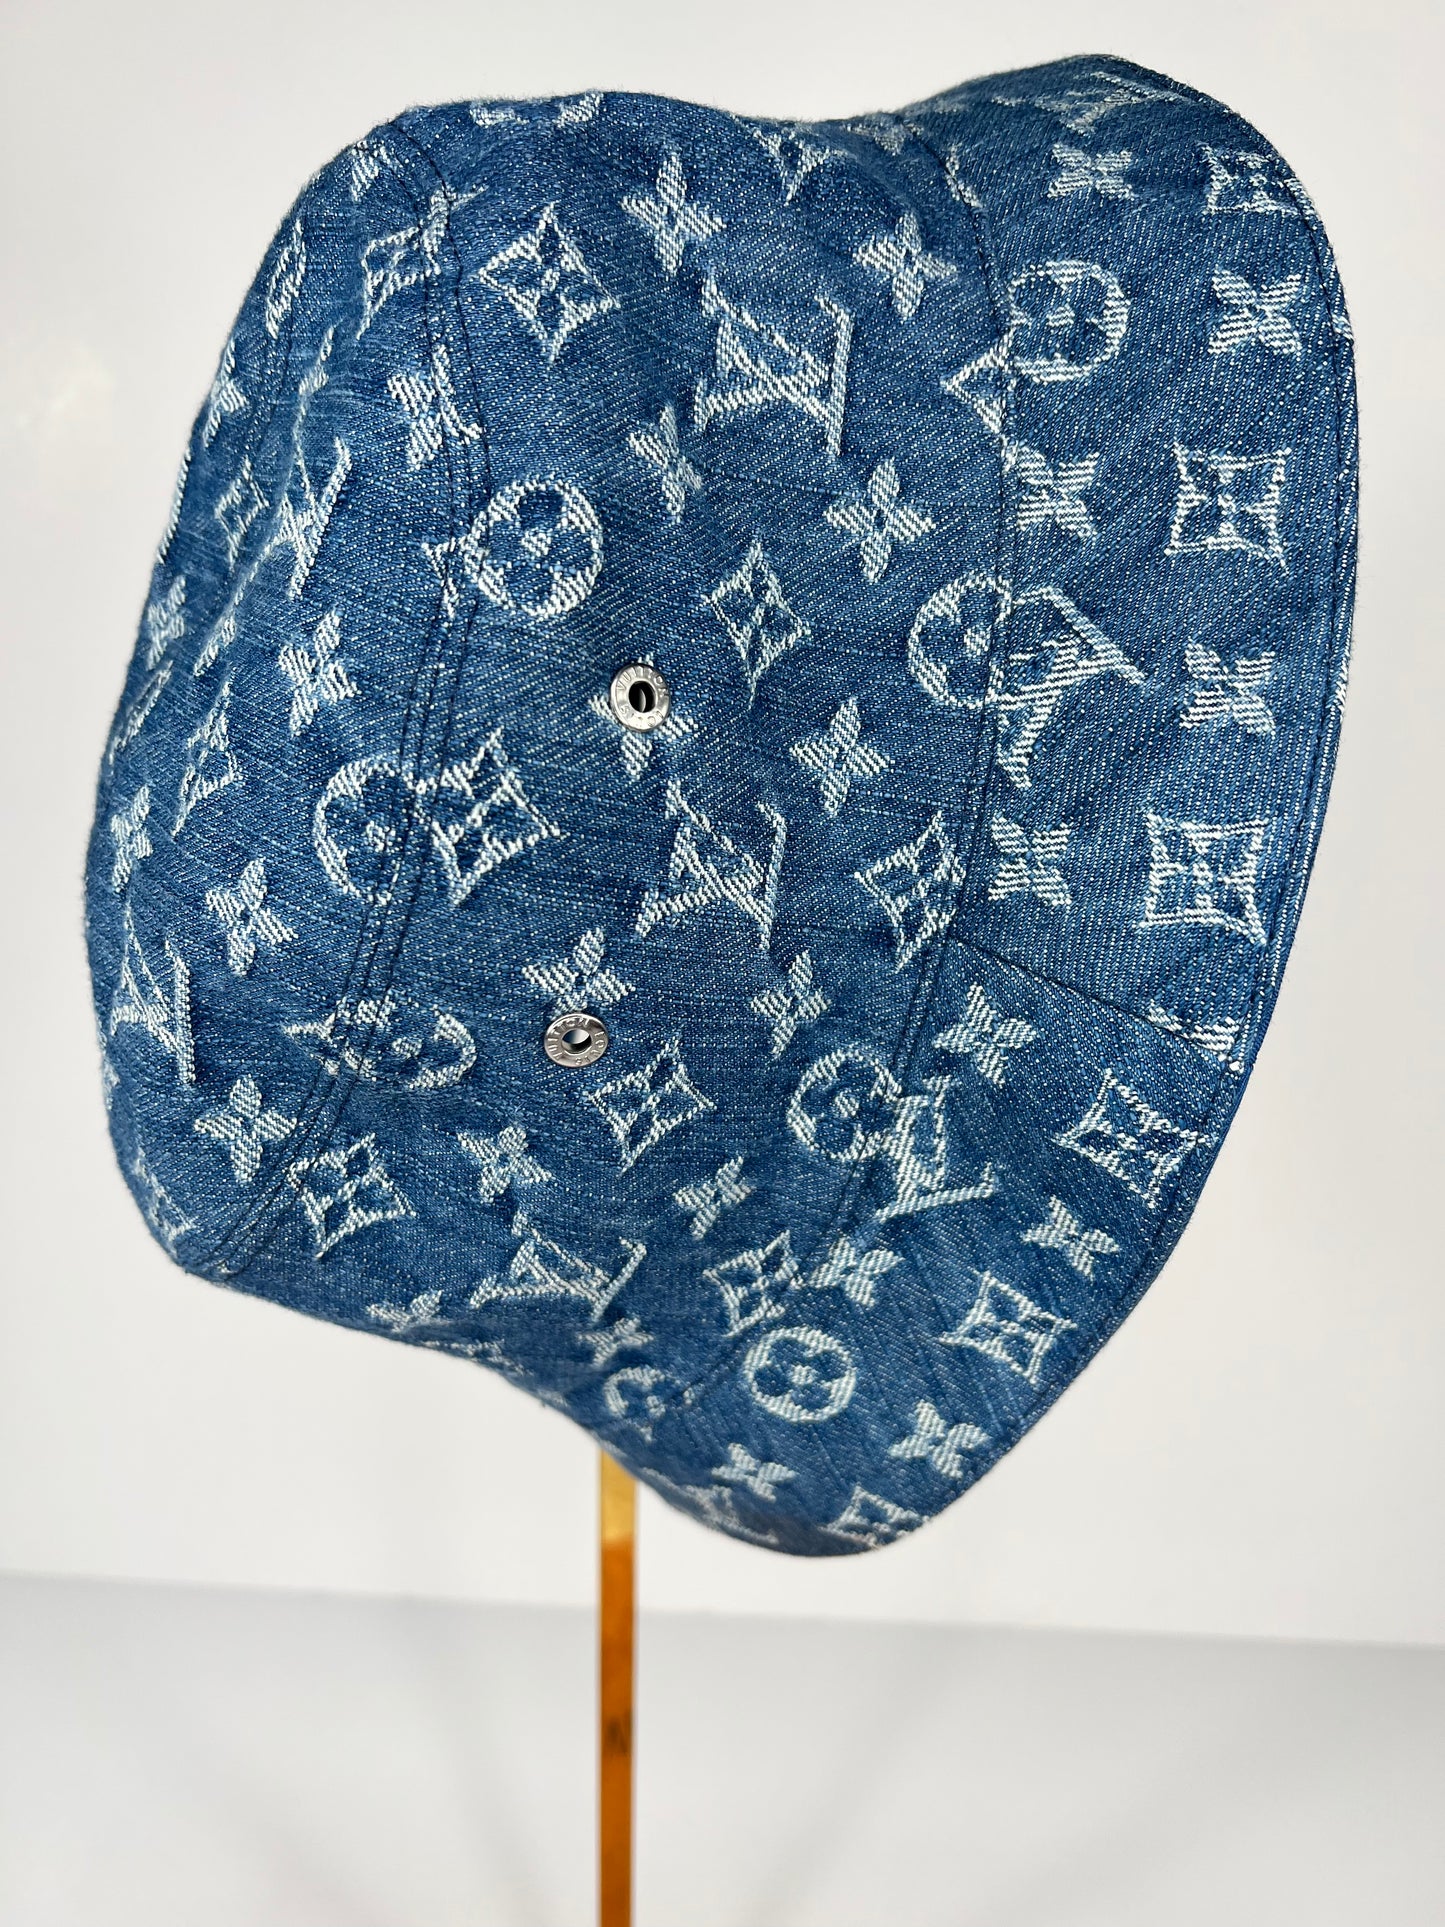 Louis Vuitton Monogram Essential Bucket Hat Blue Cotton. Size 58